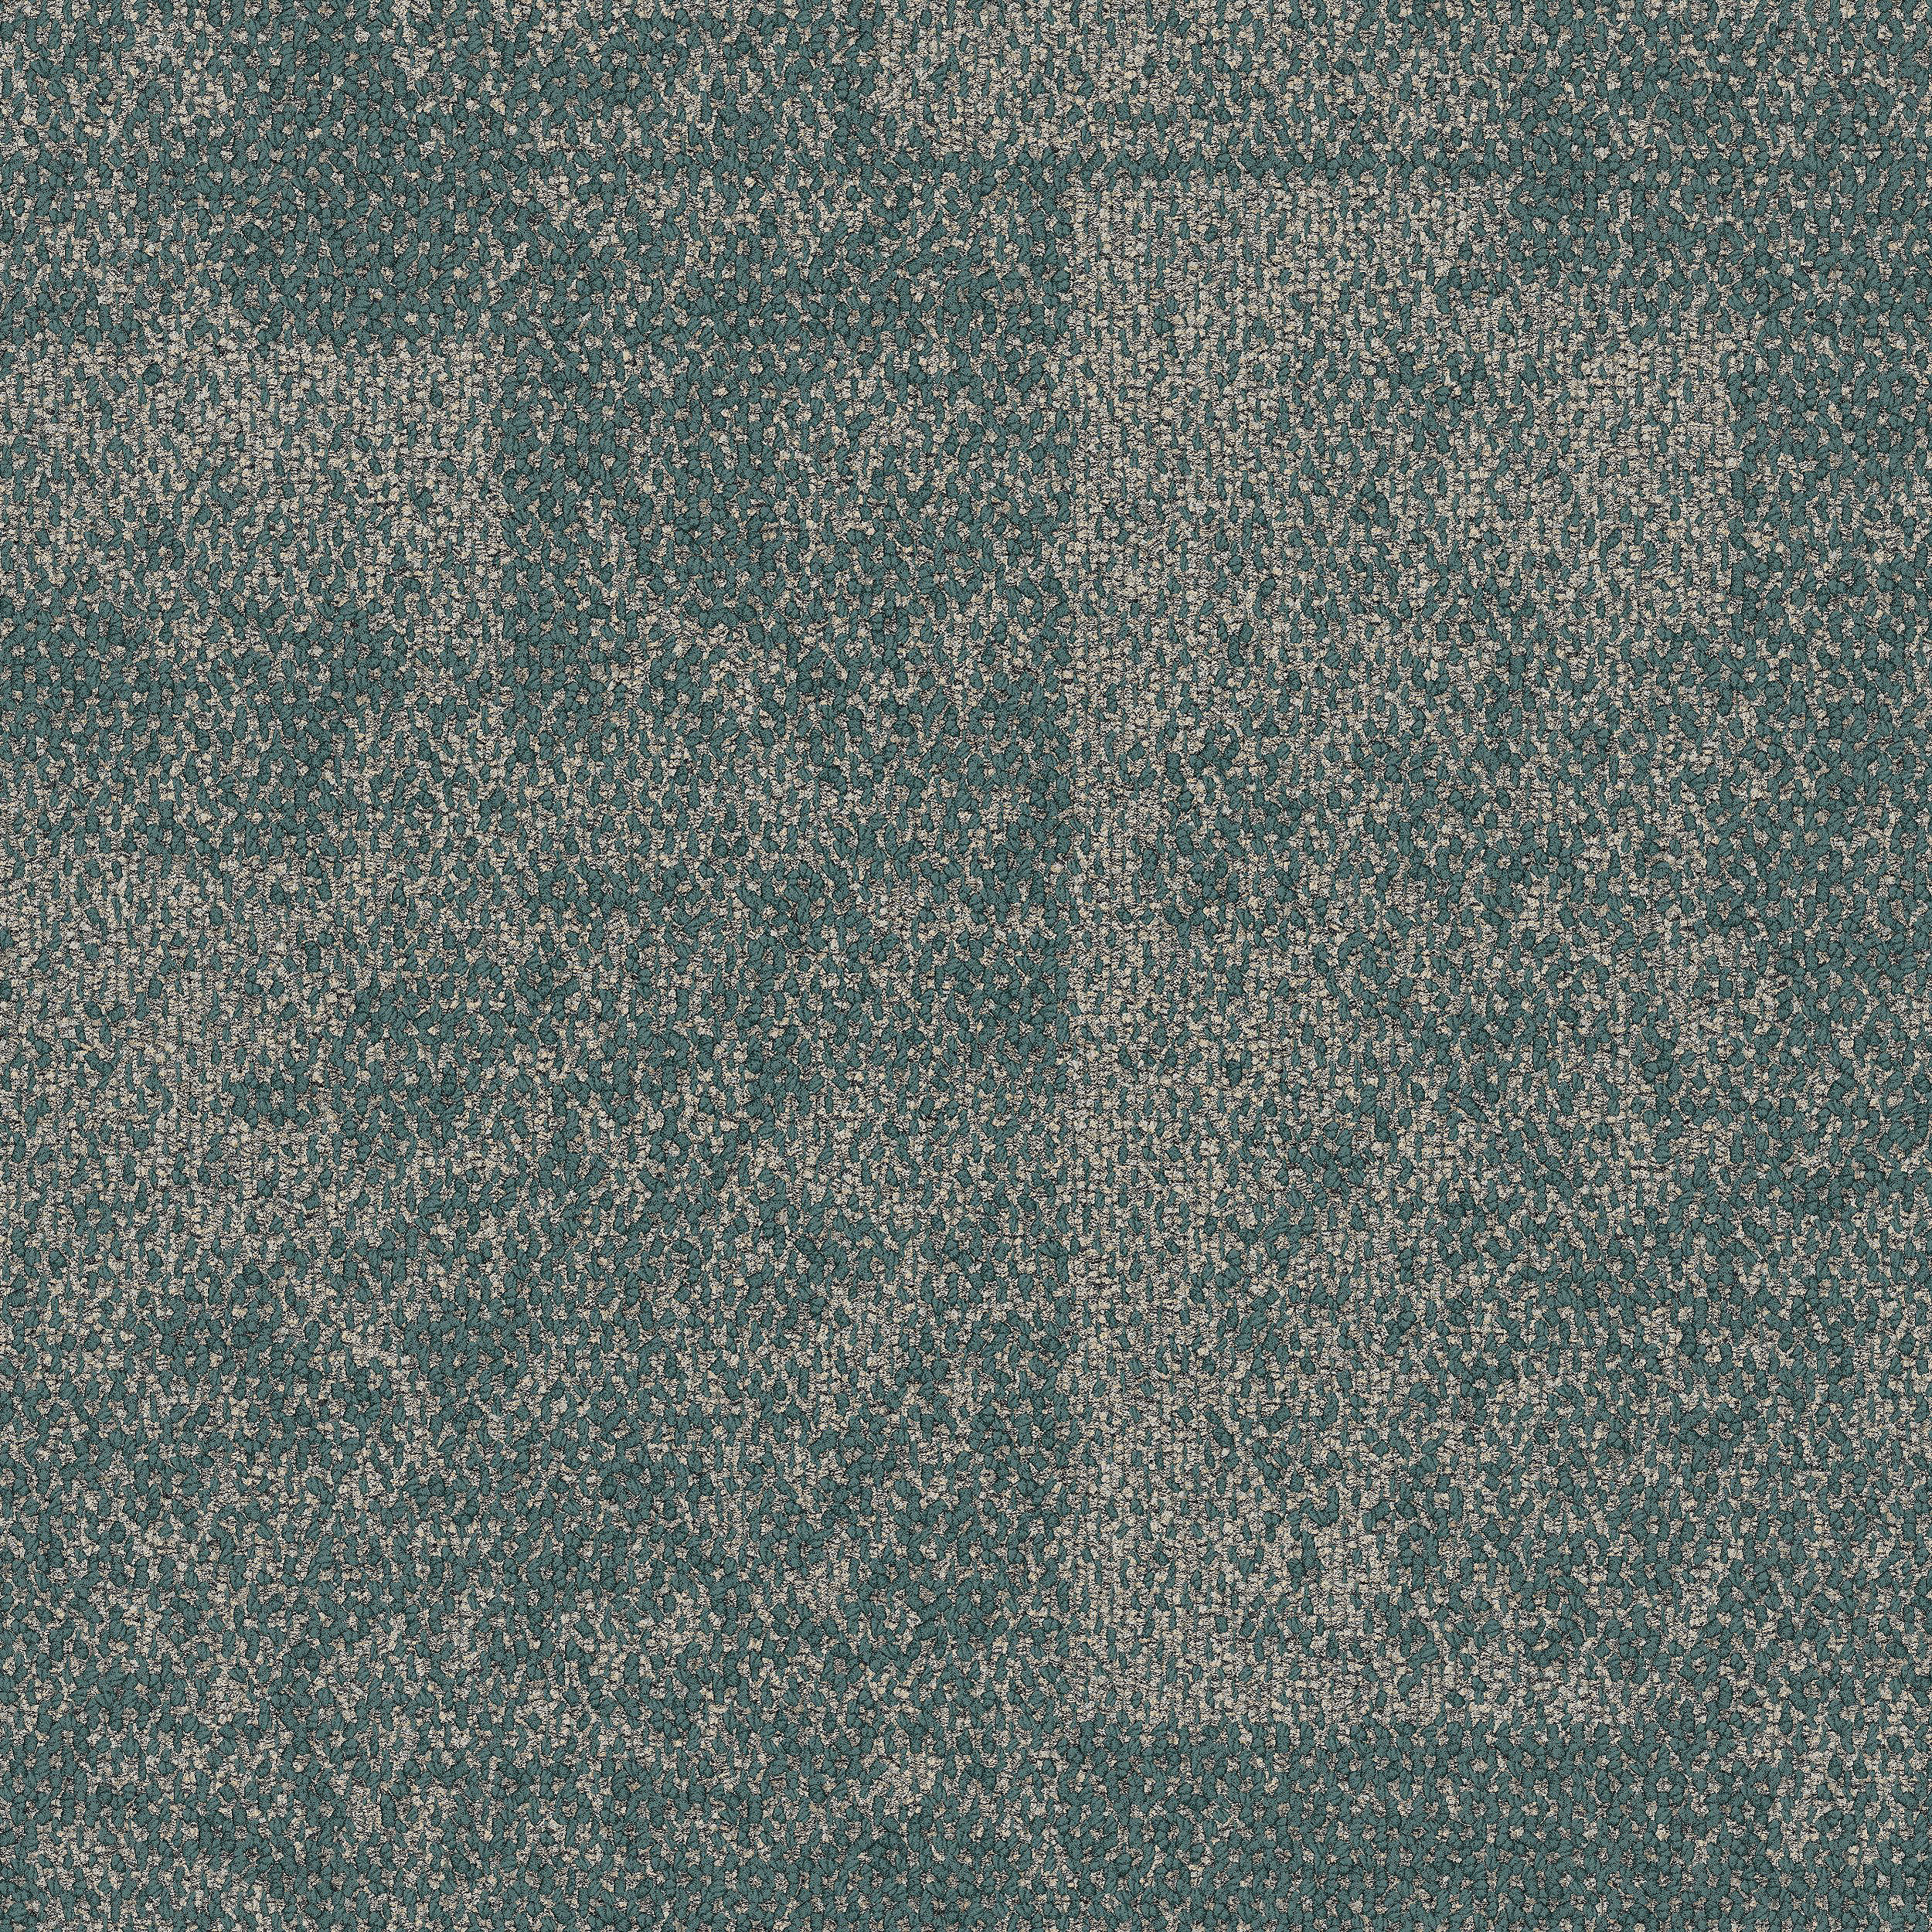 Open Air 404 Accent Carpet Tile In Teal afbeeldingnummer 5